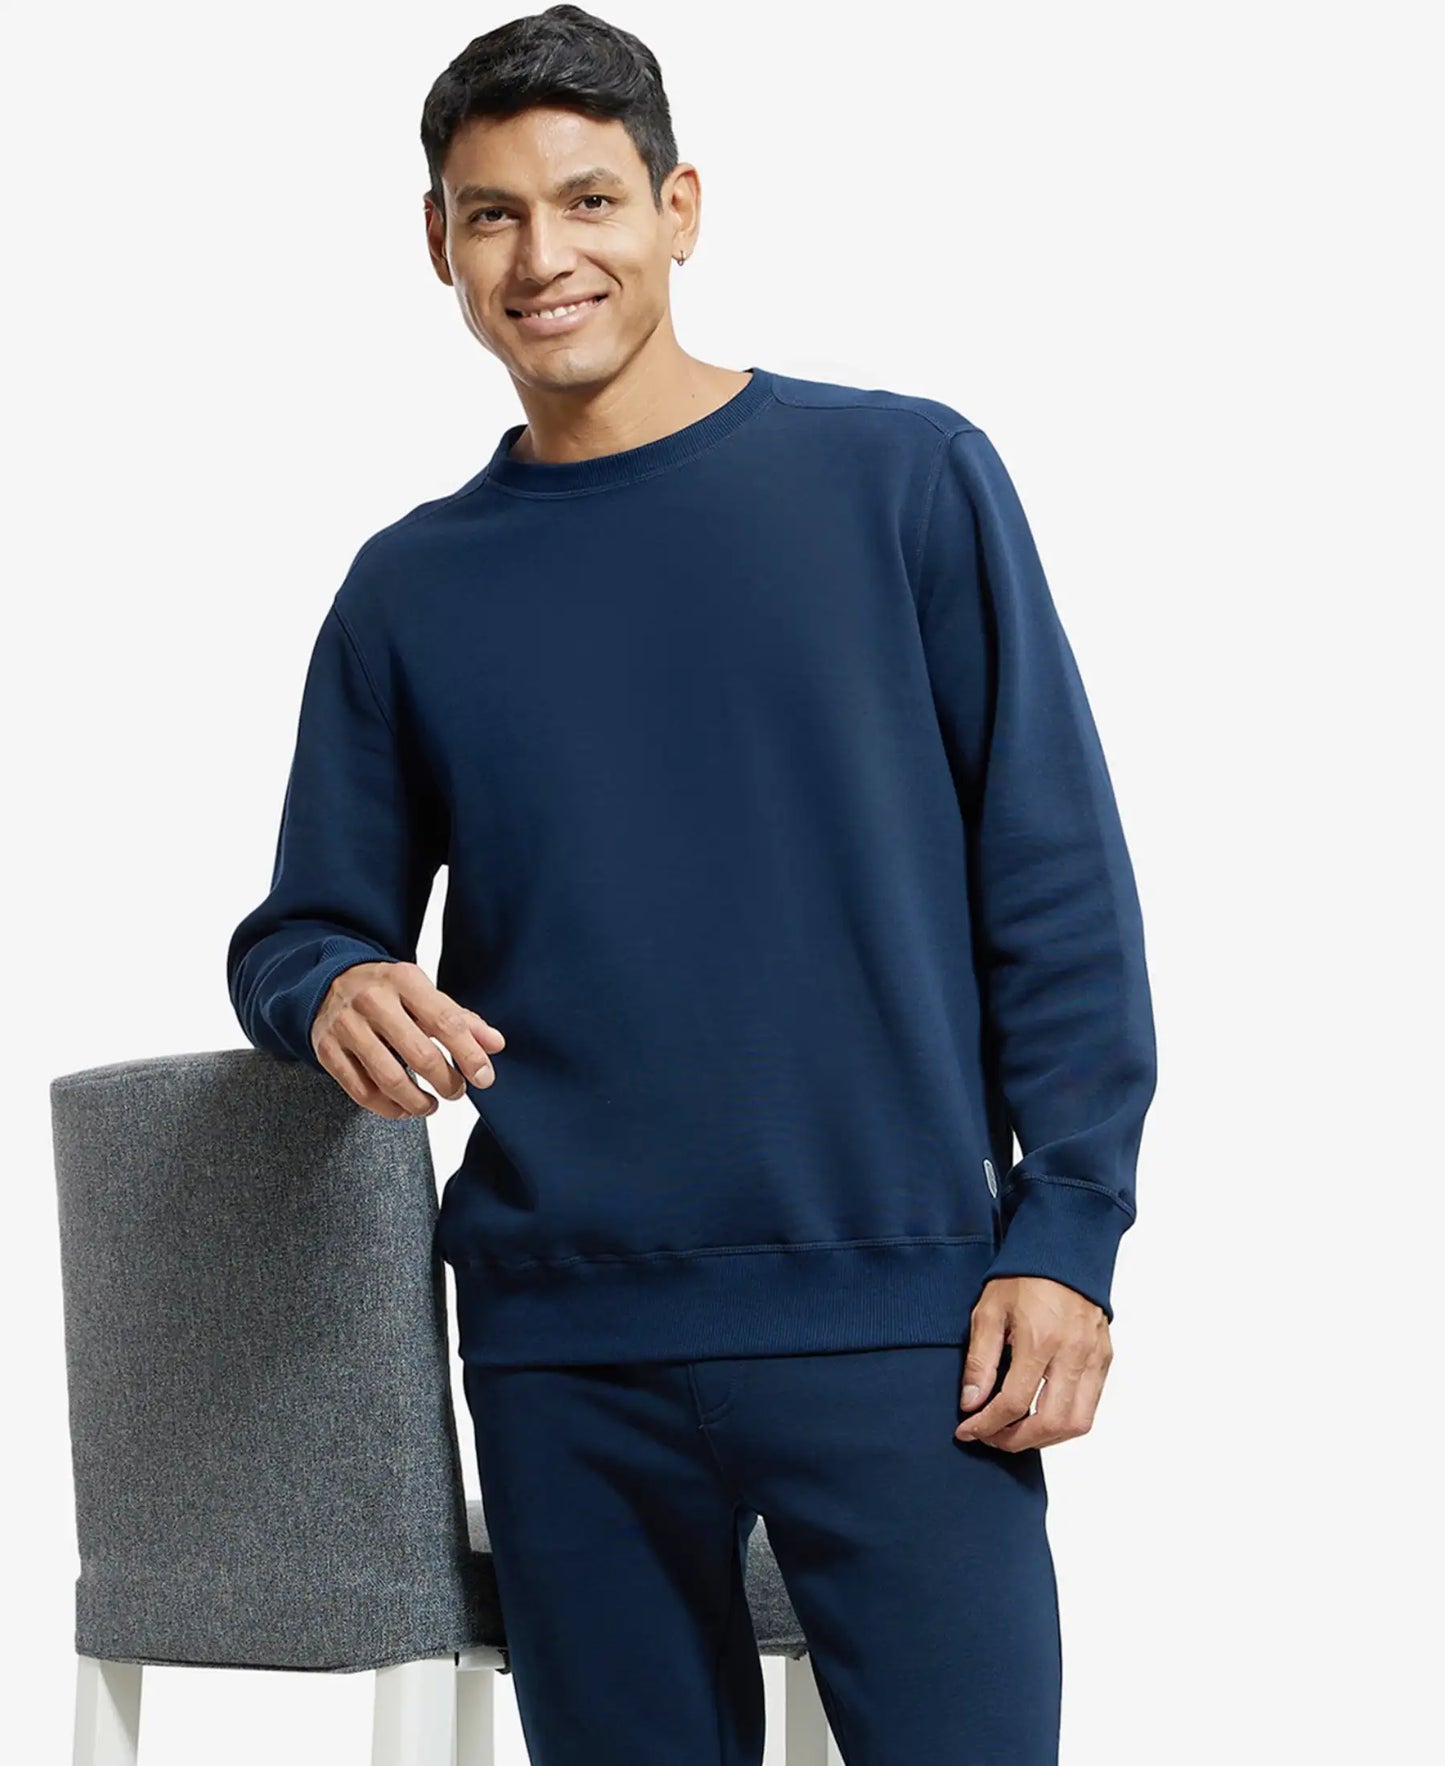 Super Combed Cotton Rich Fleece Sweatshirt with StayWarm Technology - Navy-5